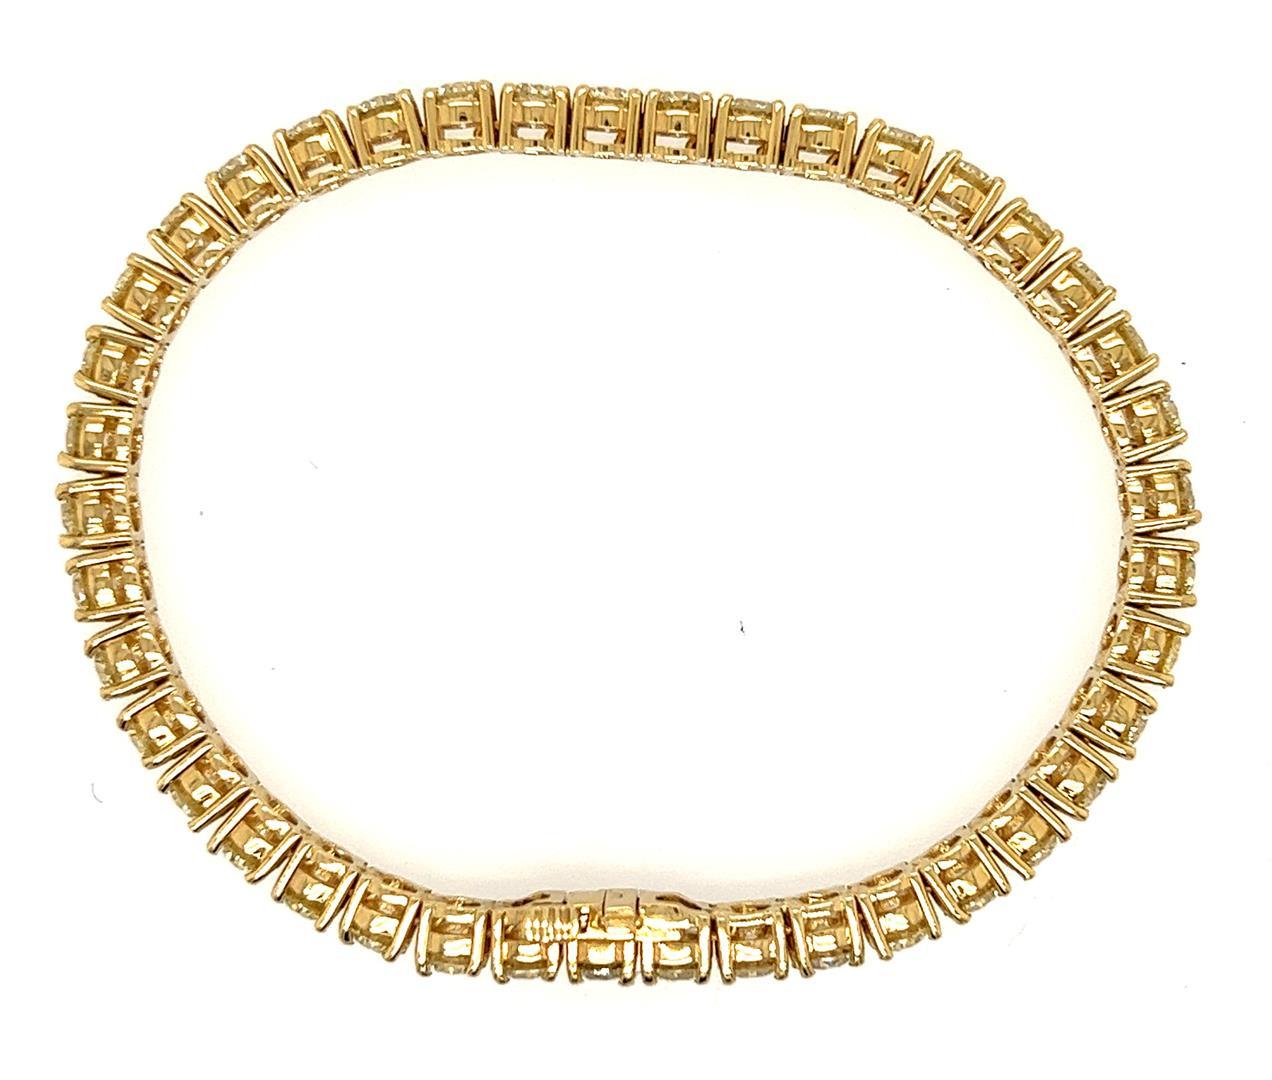 12.34 ctw Diamond Tennis Bracelet - 14KT Yellow Gold